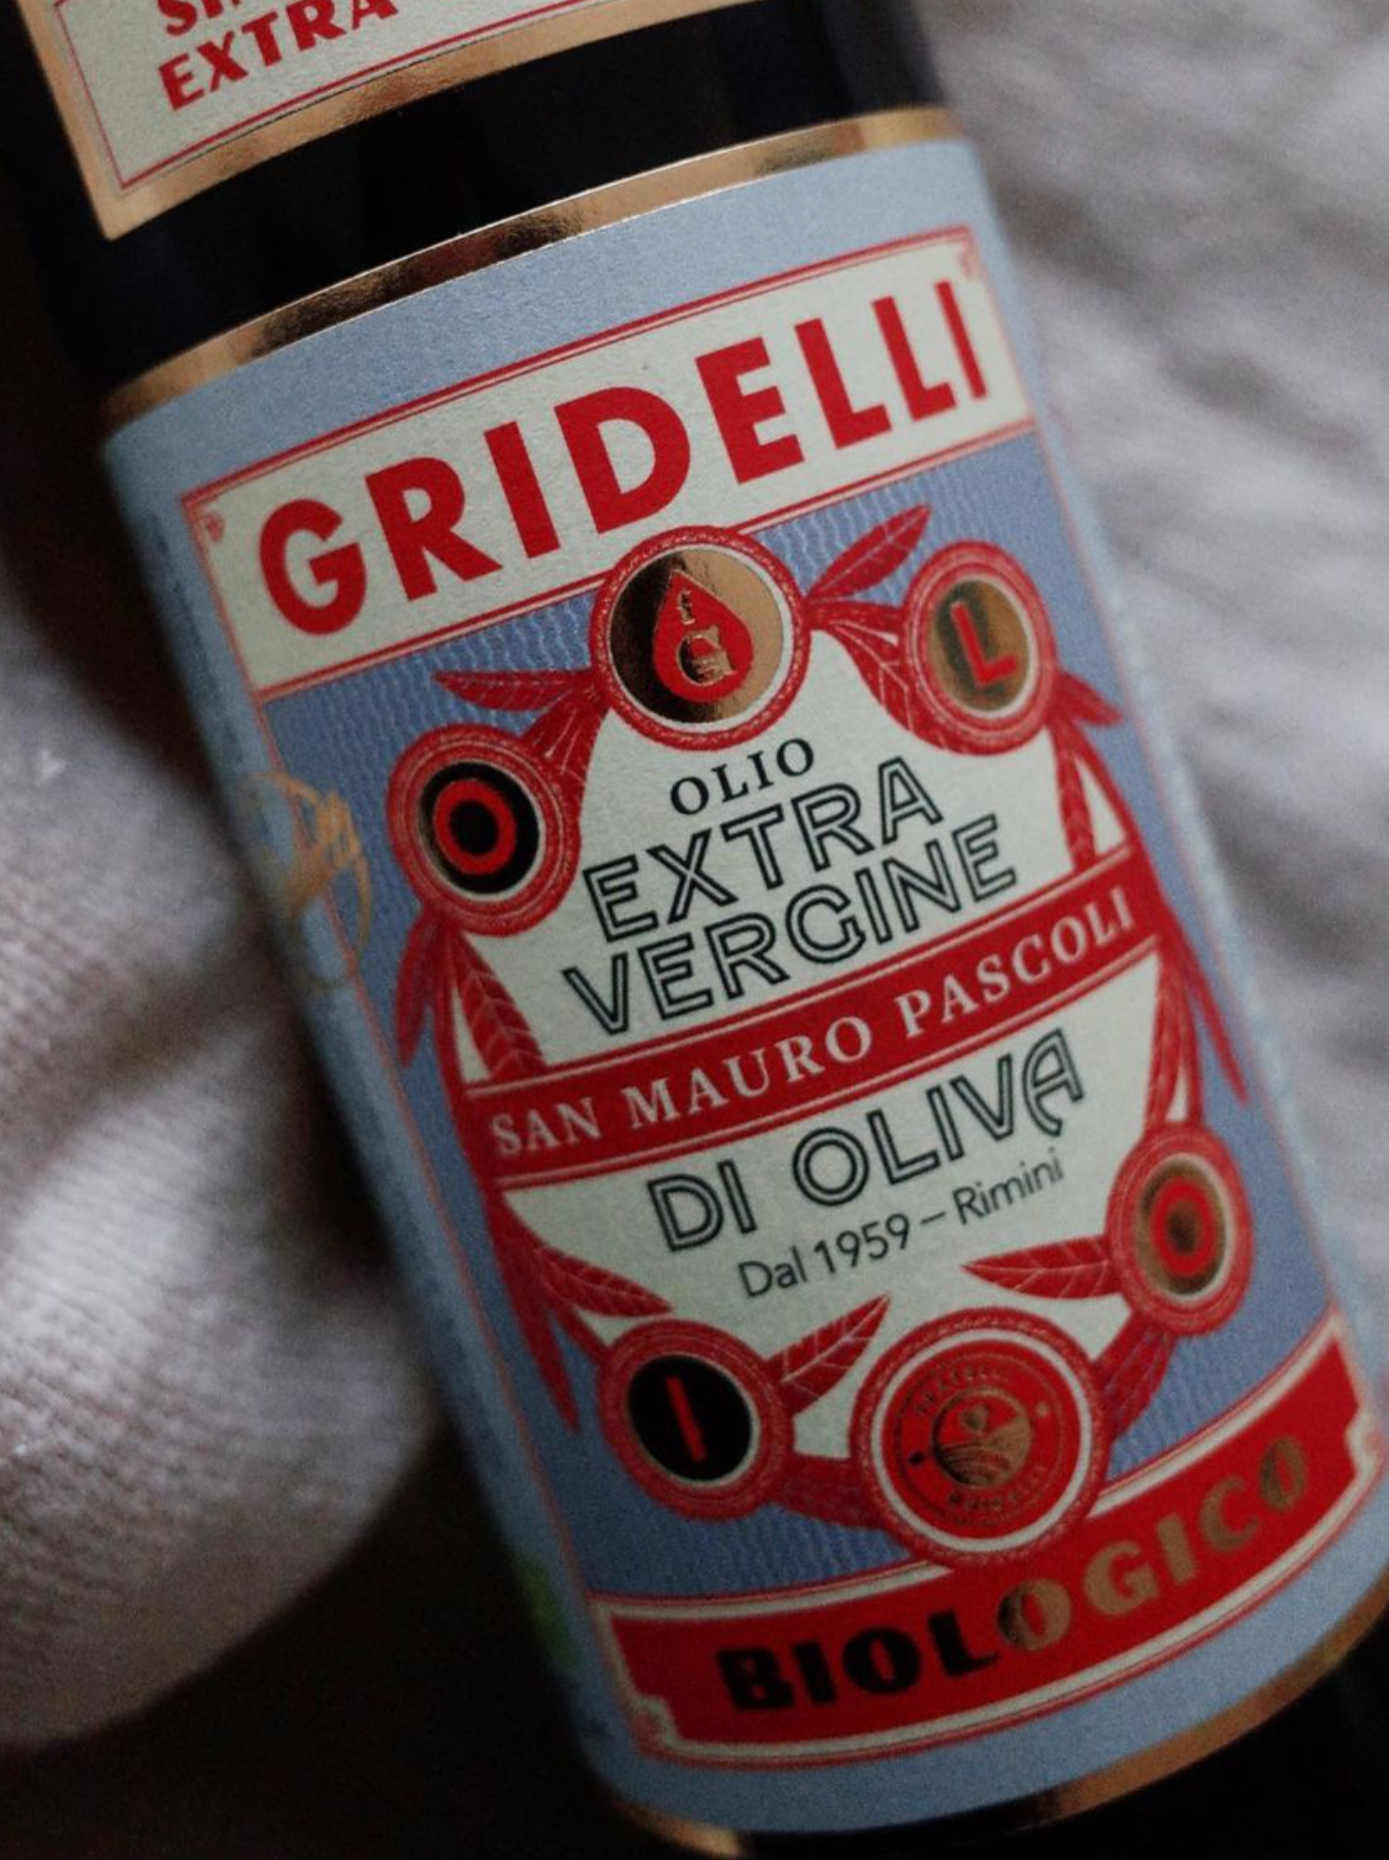 San Mauro Pascoli olive oil (500 ml)